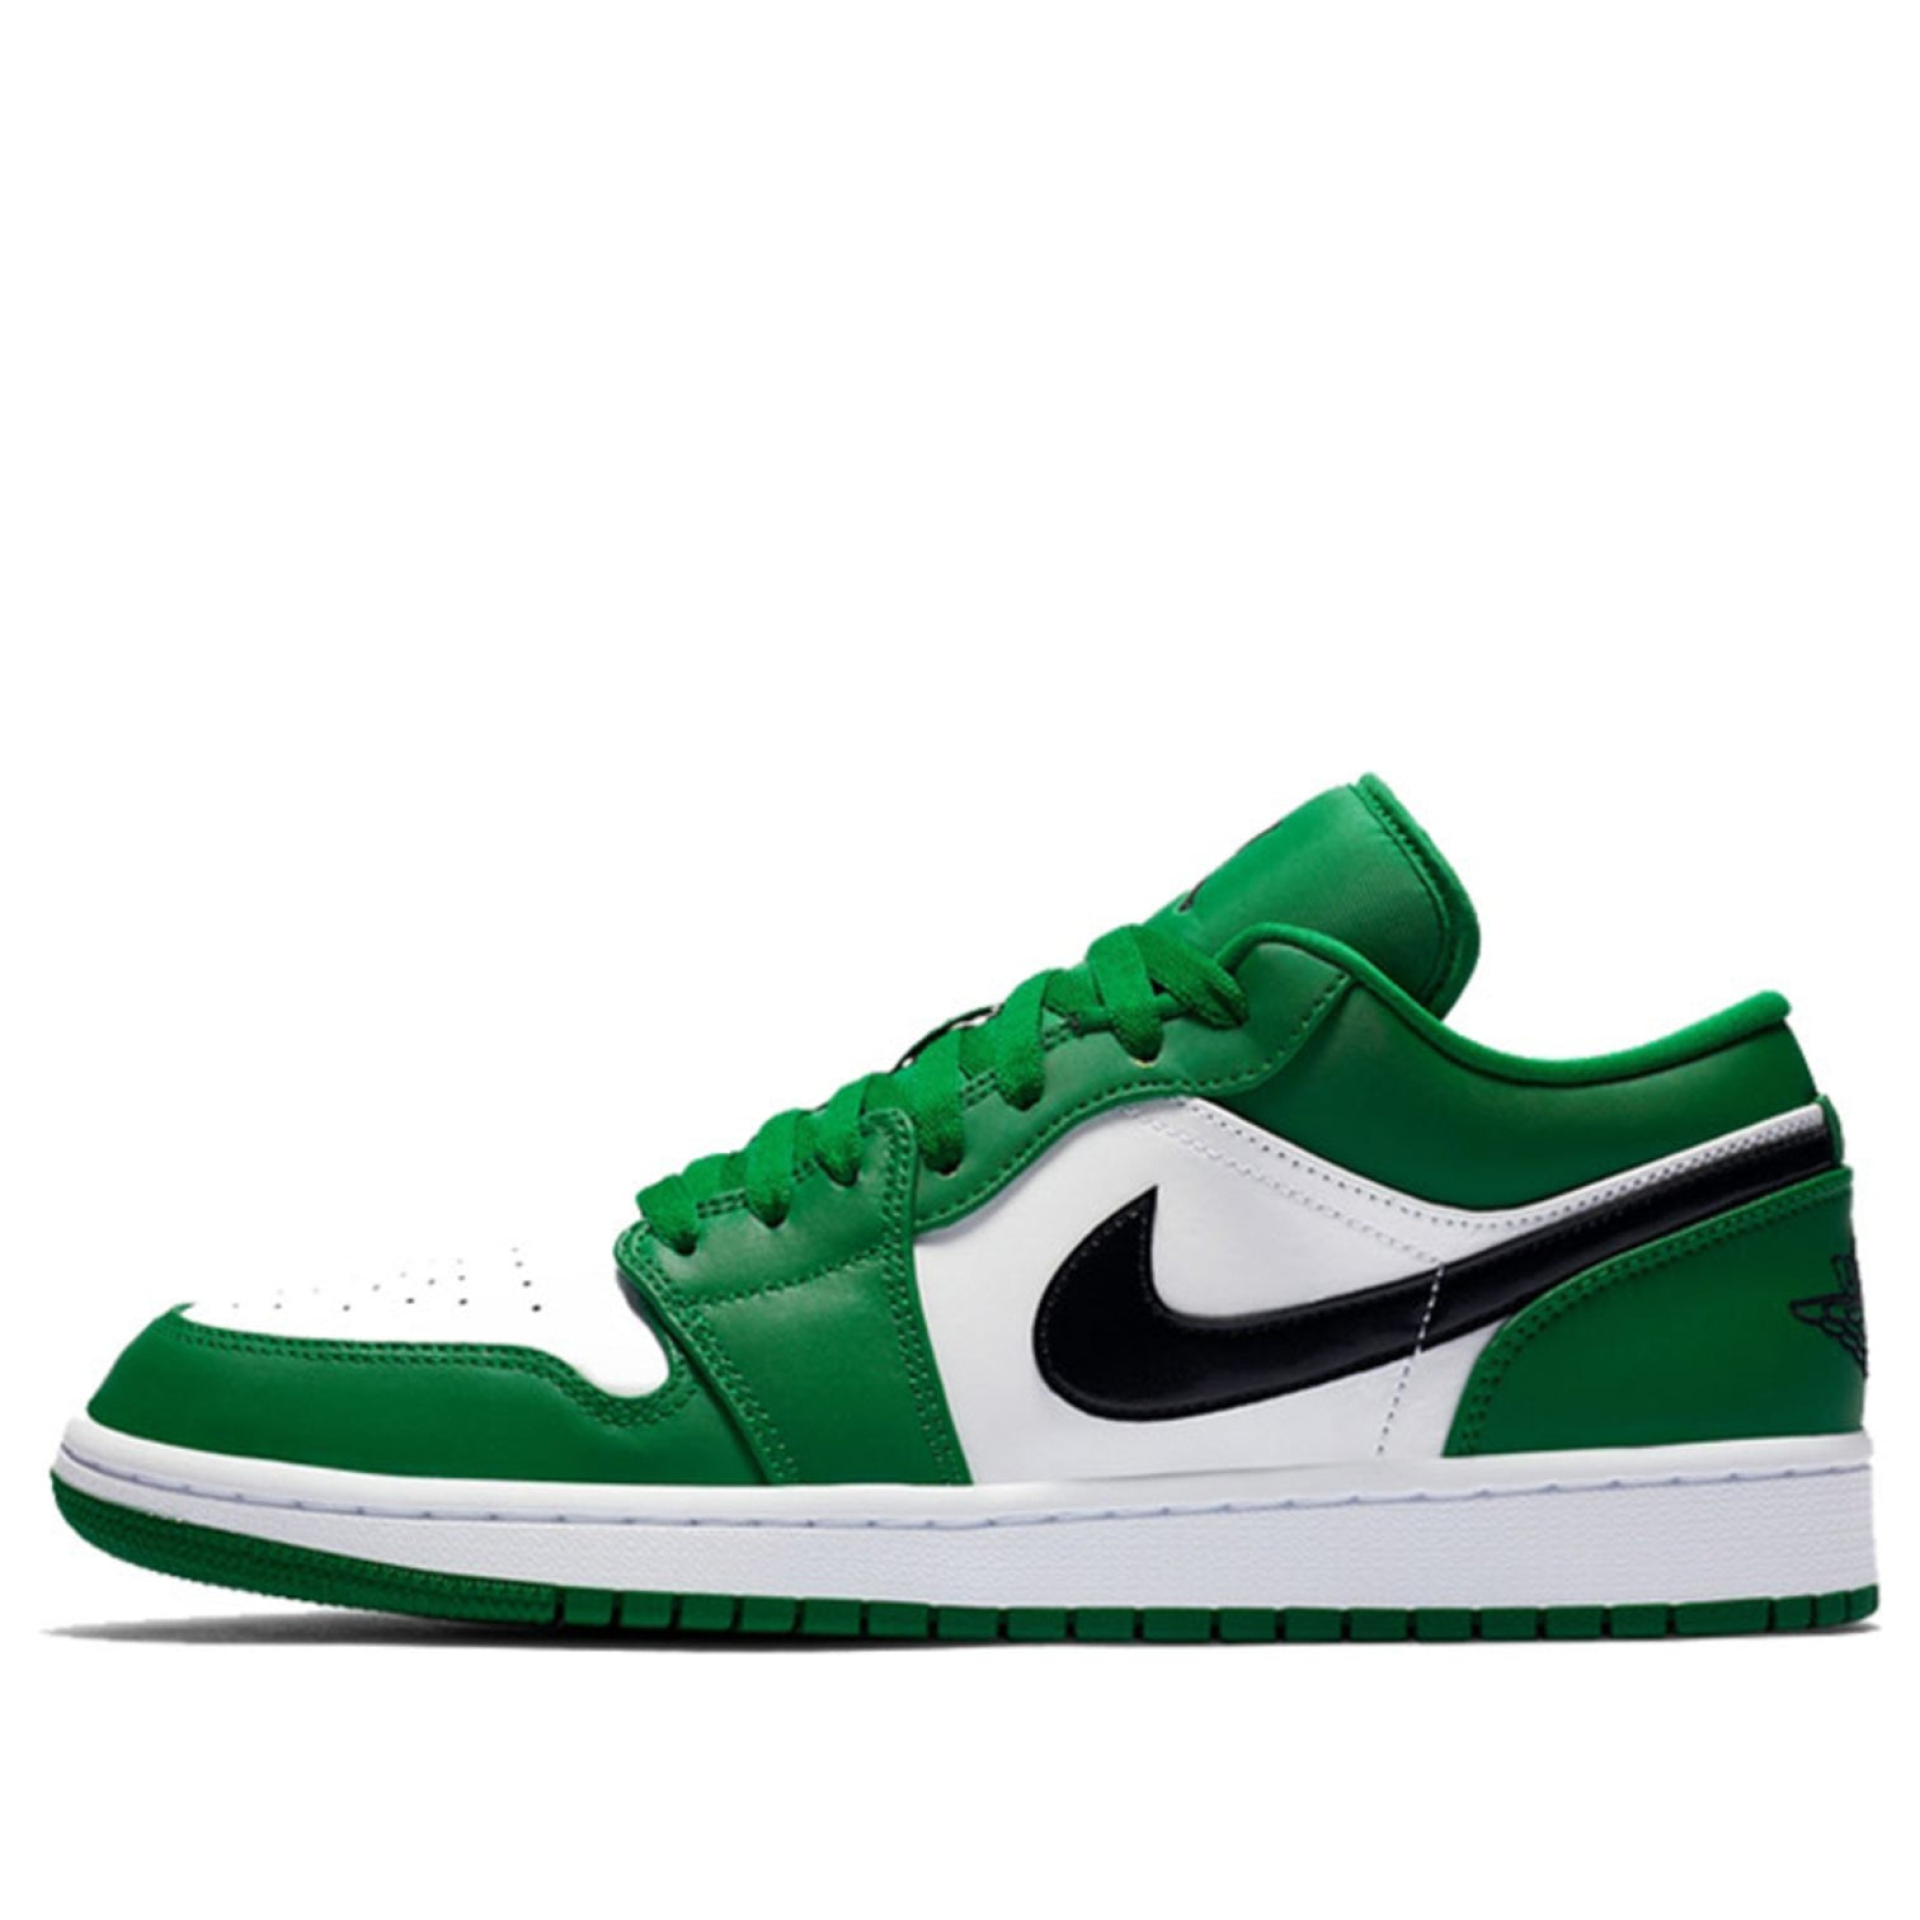 Nike Air Jordan 1 Low Pine Green - imluxstyle